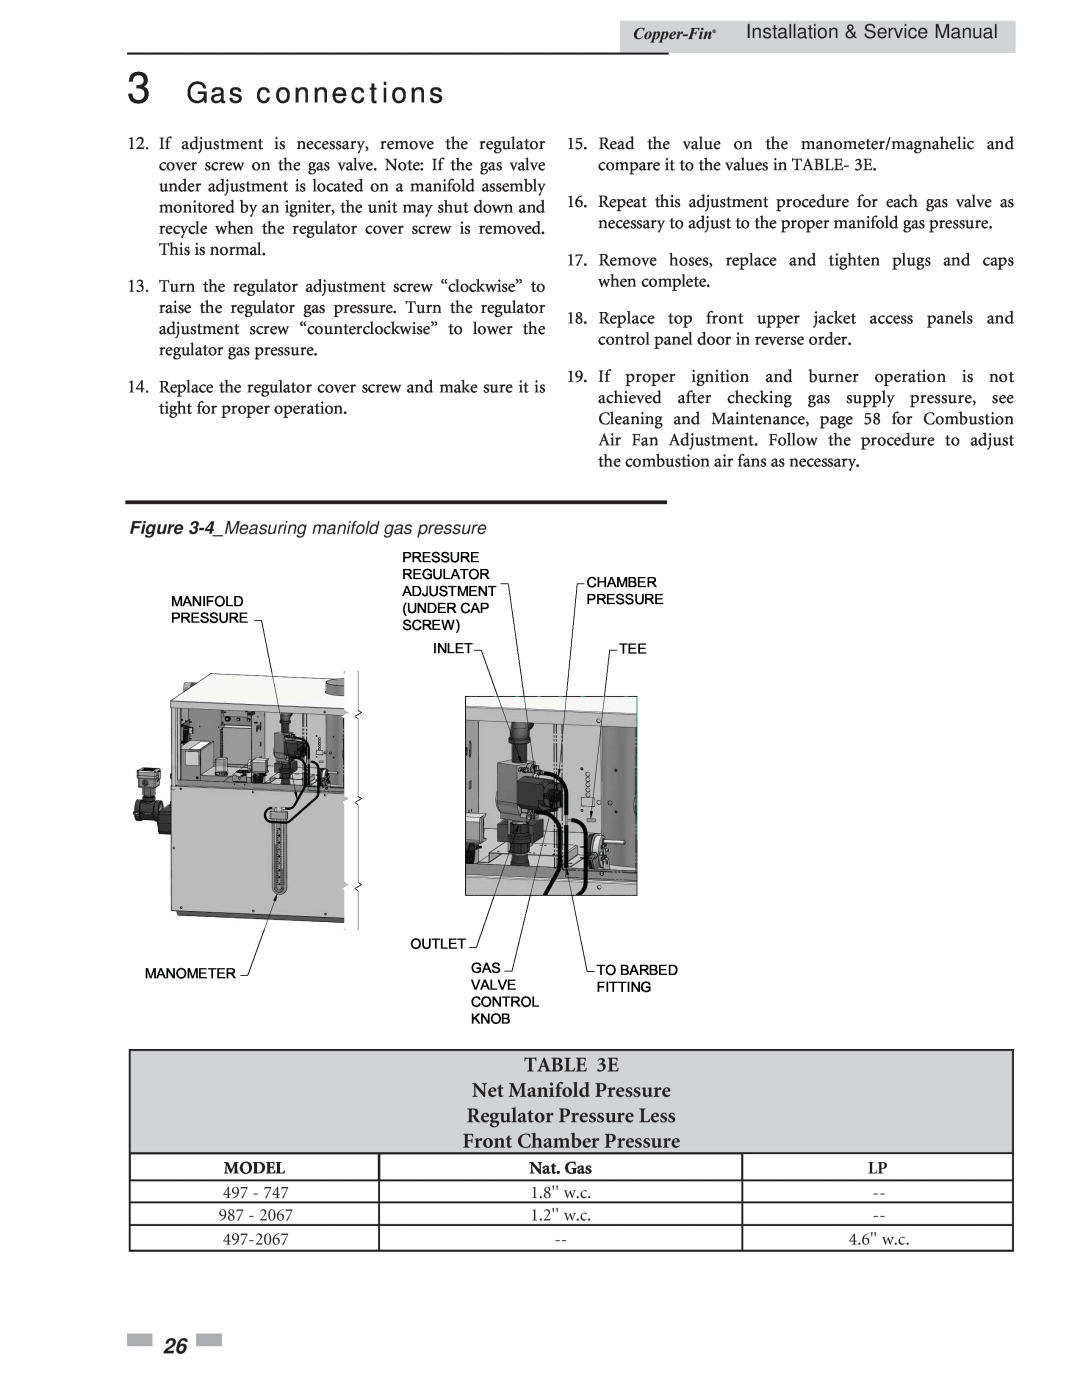 Lochinvar 497 - 2067 E Net Manifold Pressure, Regulator Pressure Less Front Chamber Pressure, Gas connections 